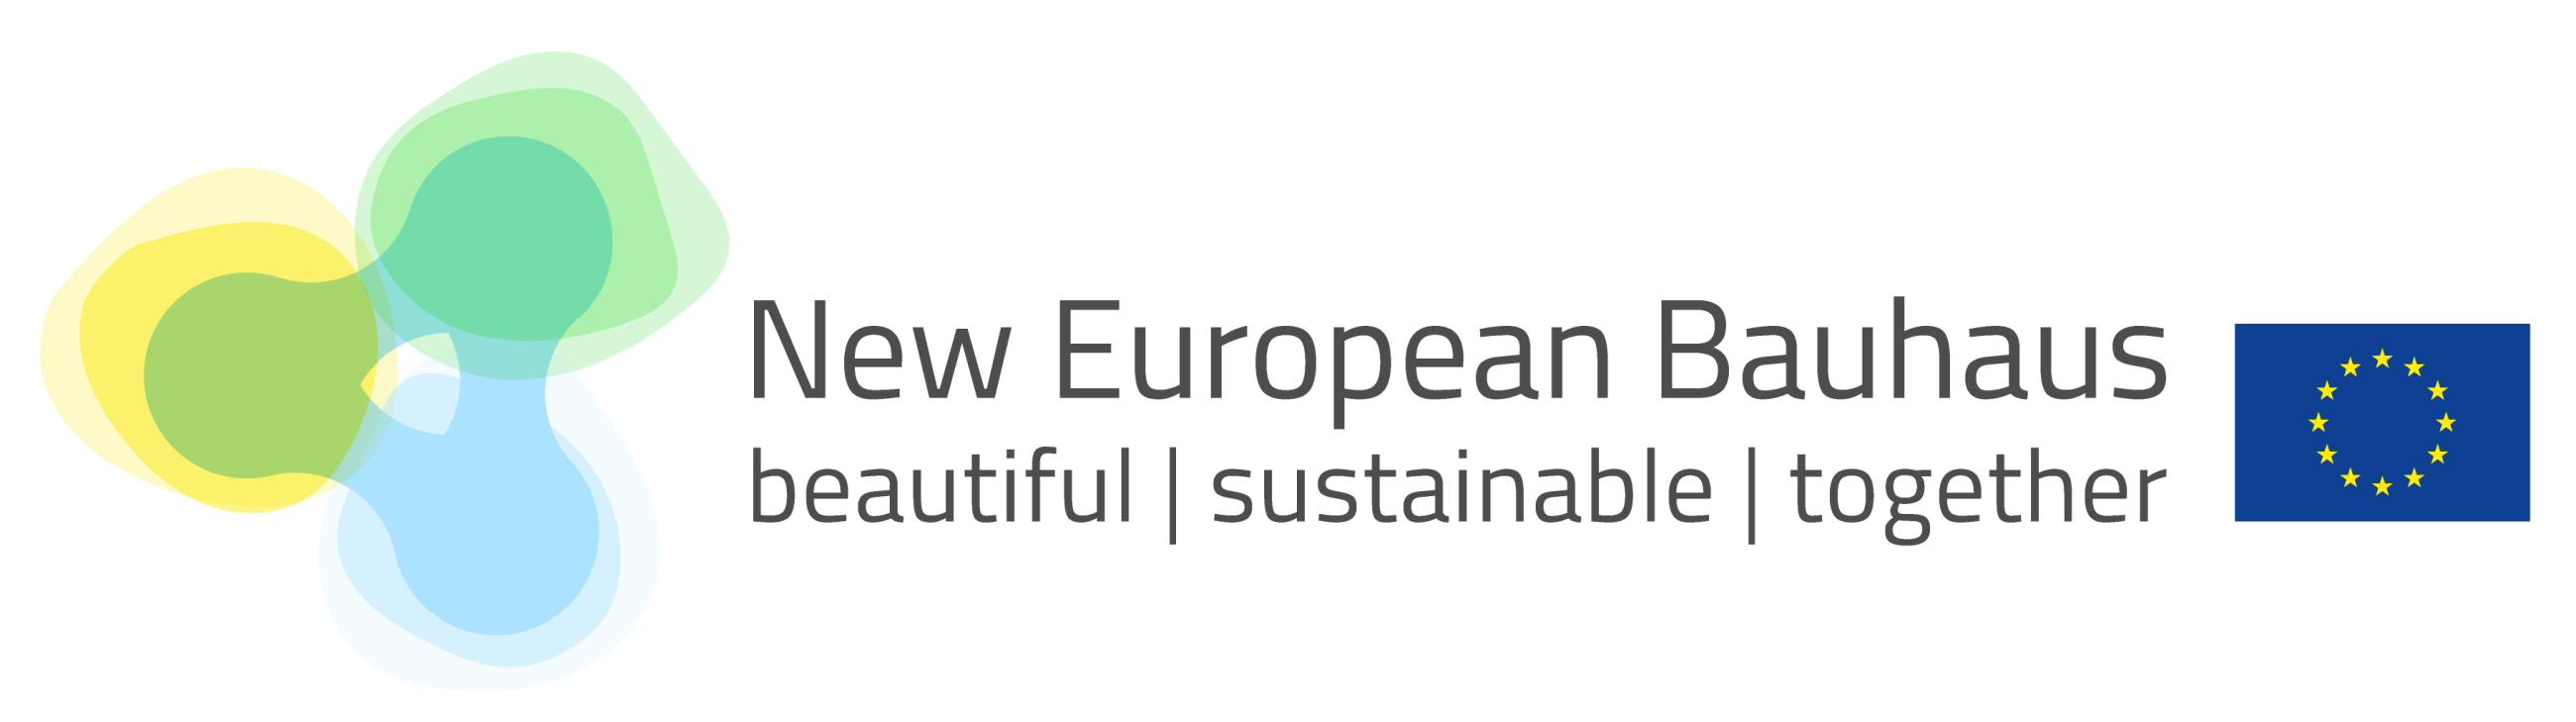 New European Bauhaus logo EUfag